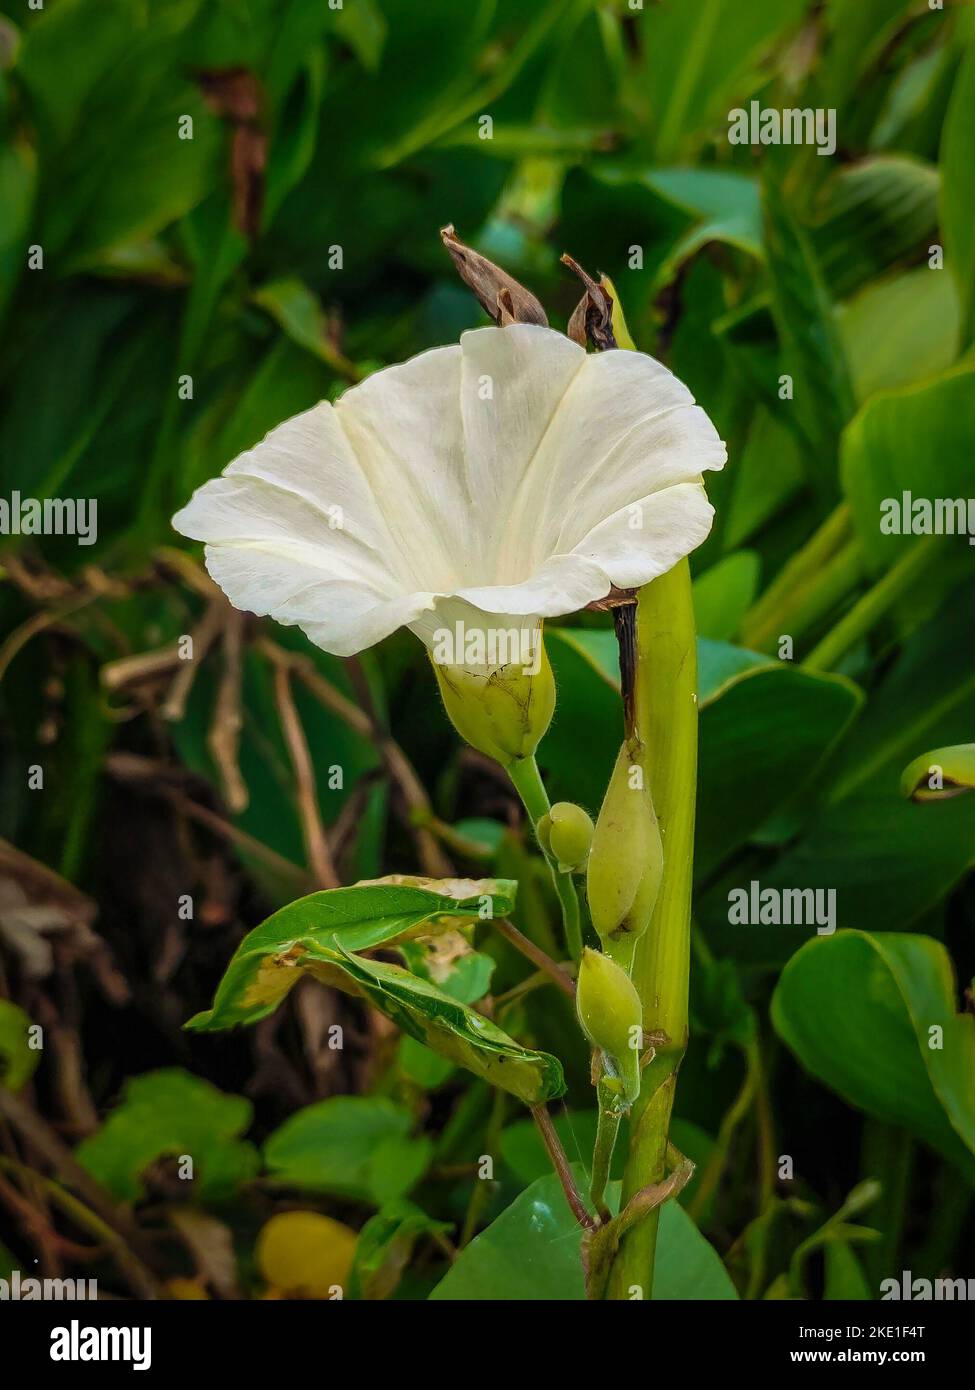 A closeup shot of a beautiful white Merremia flower in the garden Stock Photo